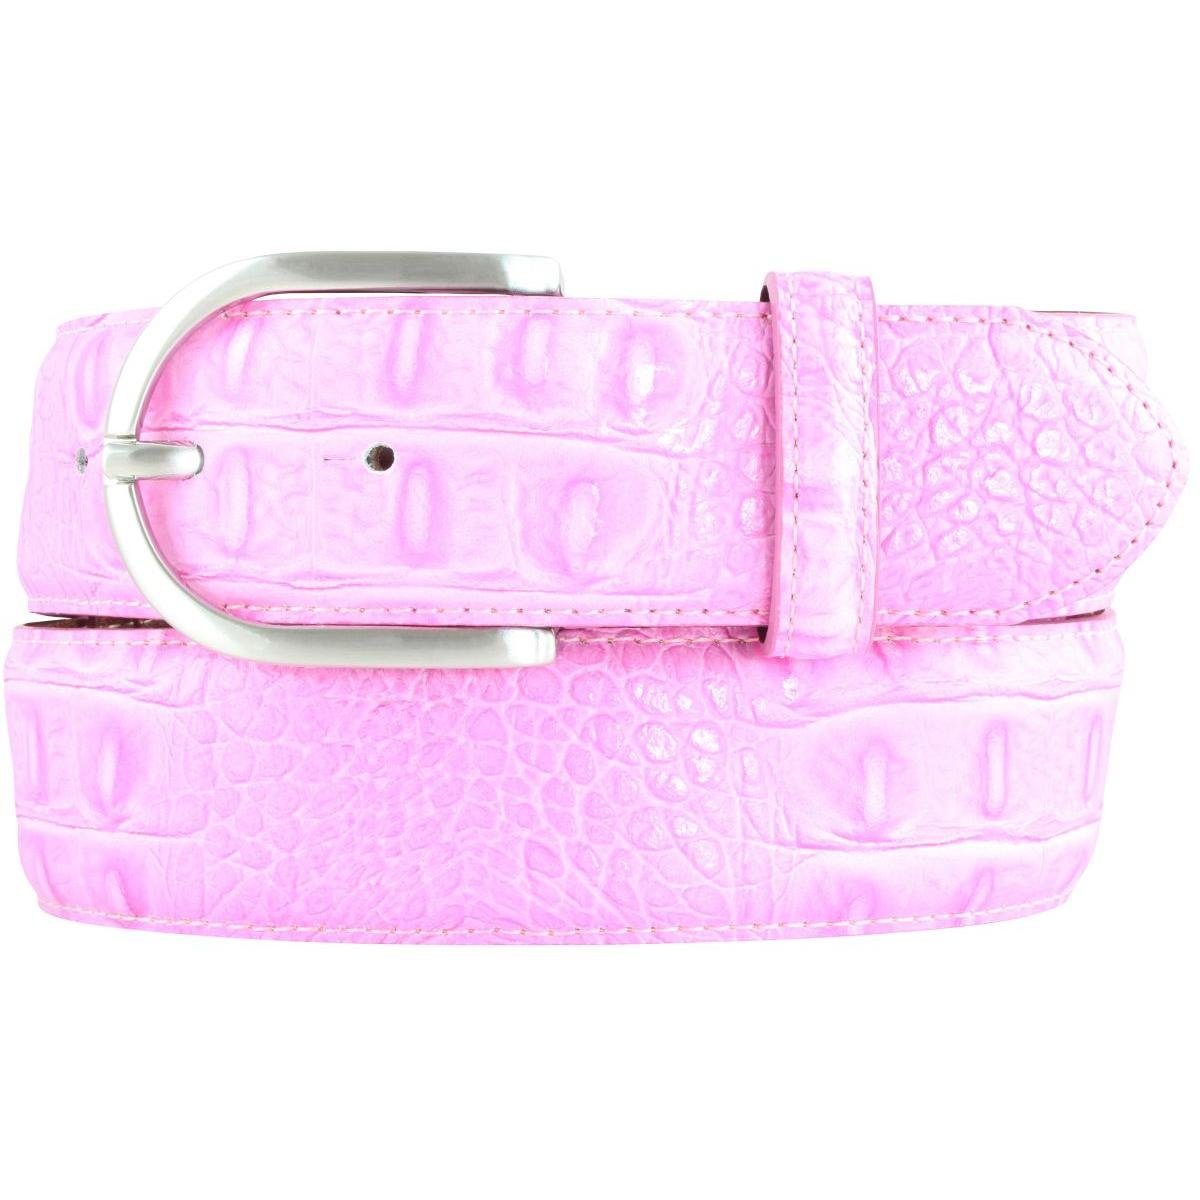 BELTINGER Ledergürtel Damen-Gürtel mit Krokoprägung 4 cm - Leder-Gürtel für Damen 40mm Kroko Pink, Silber